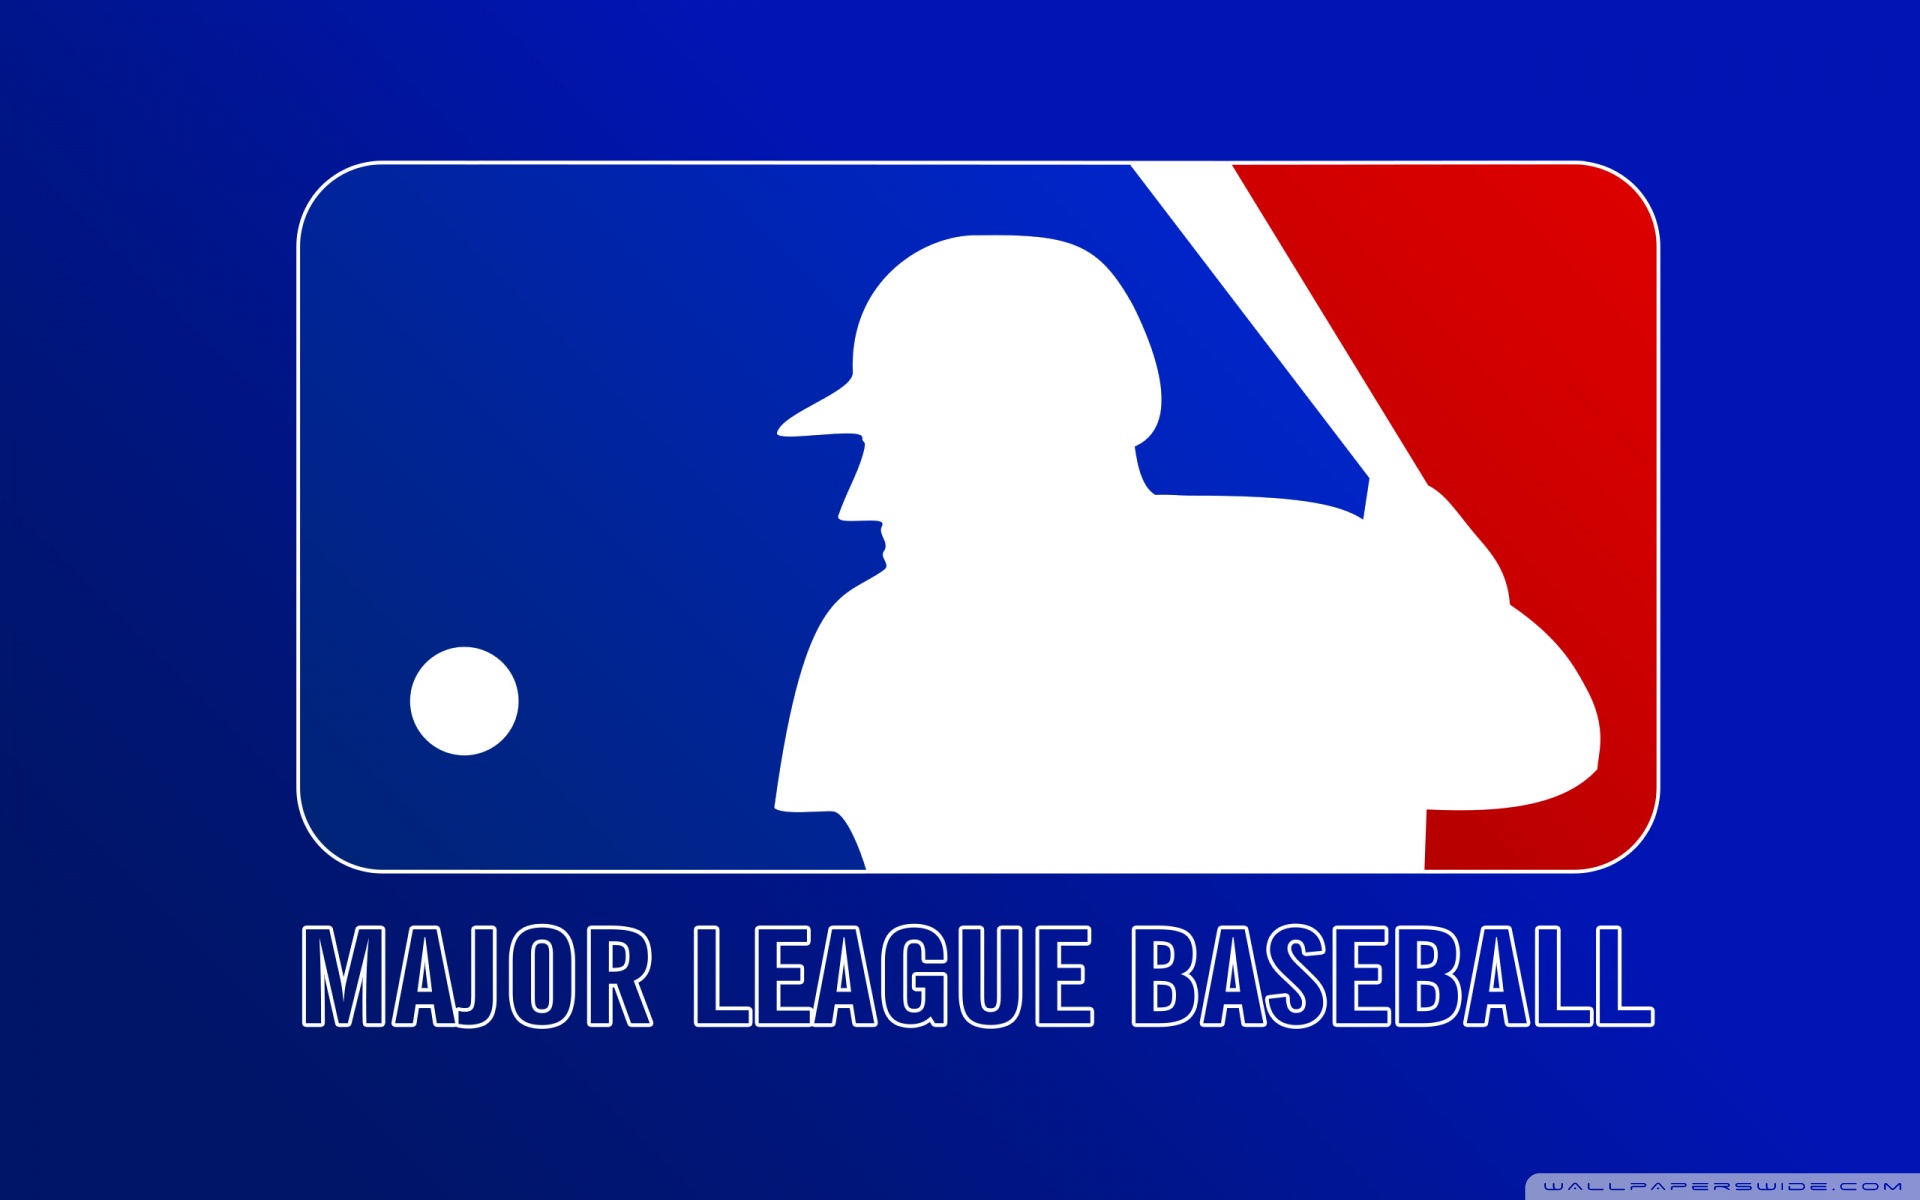 Major League Baseball Mlb Ultra Hd Desktop Background Wallpaper For 4k Uhd Tv Tablet Smartphone